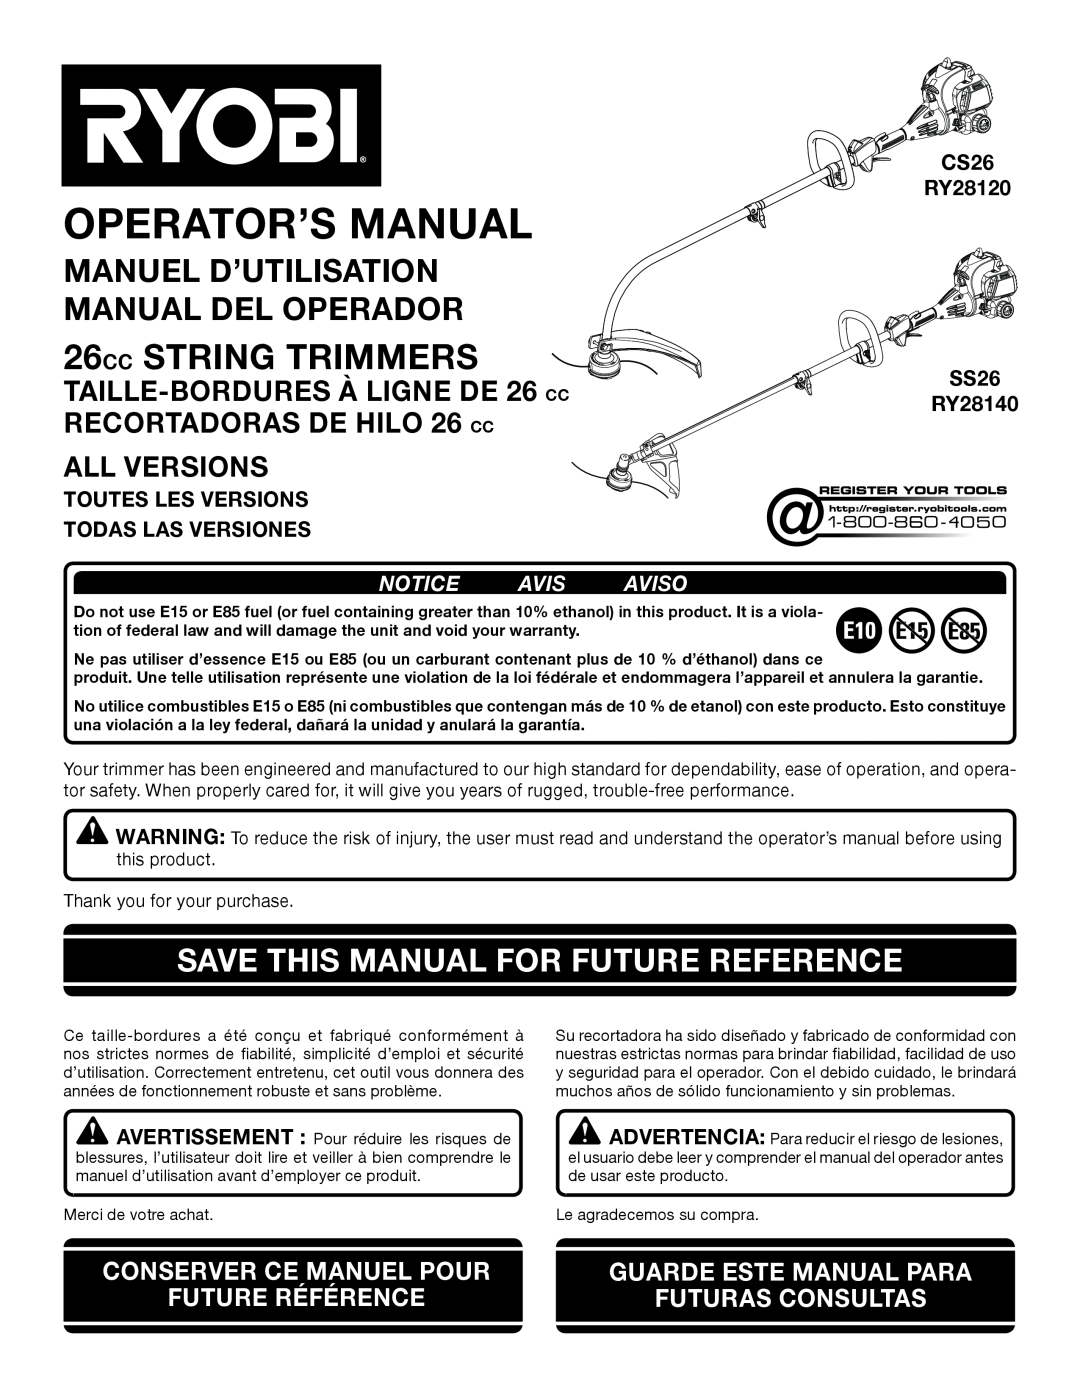 Ryobi RY28120, RY28140 manuel dutilisation 26CC STRING TRIMMERS, Manuel D’Utilisation Manual Del Operador, All Versions 